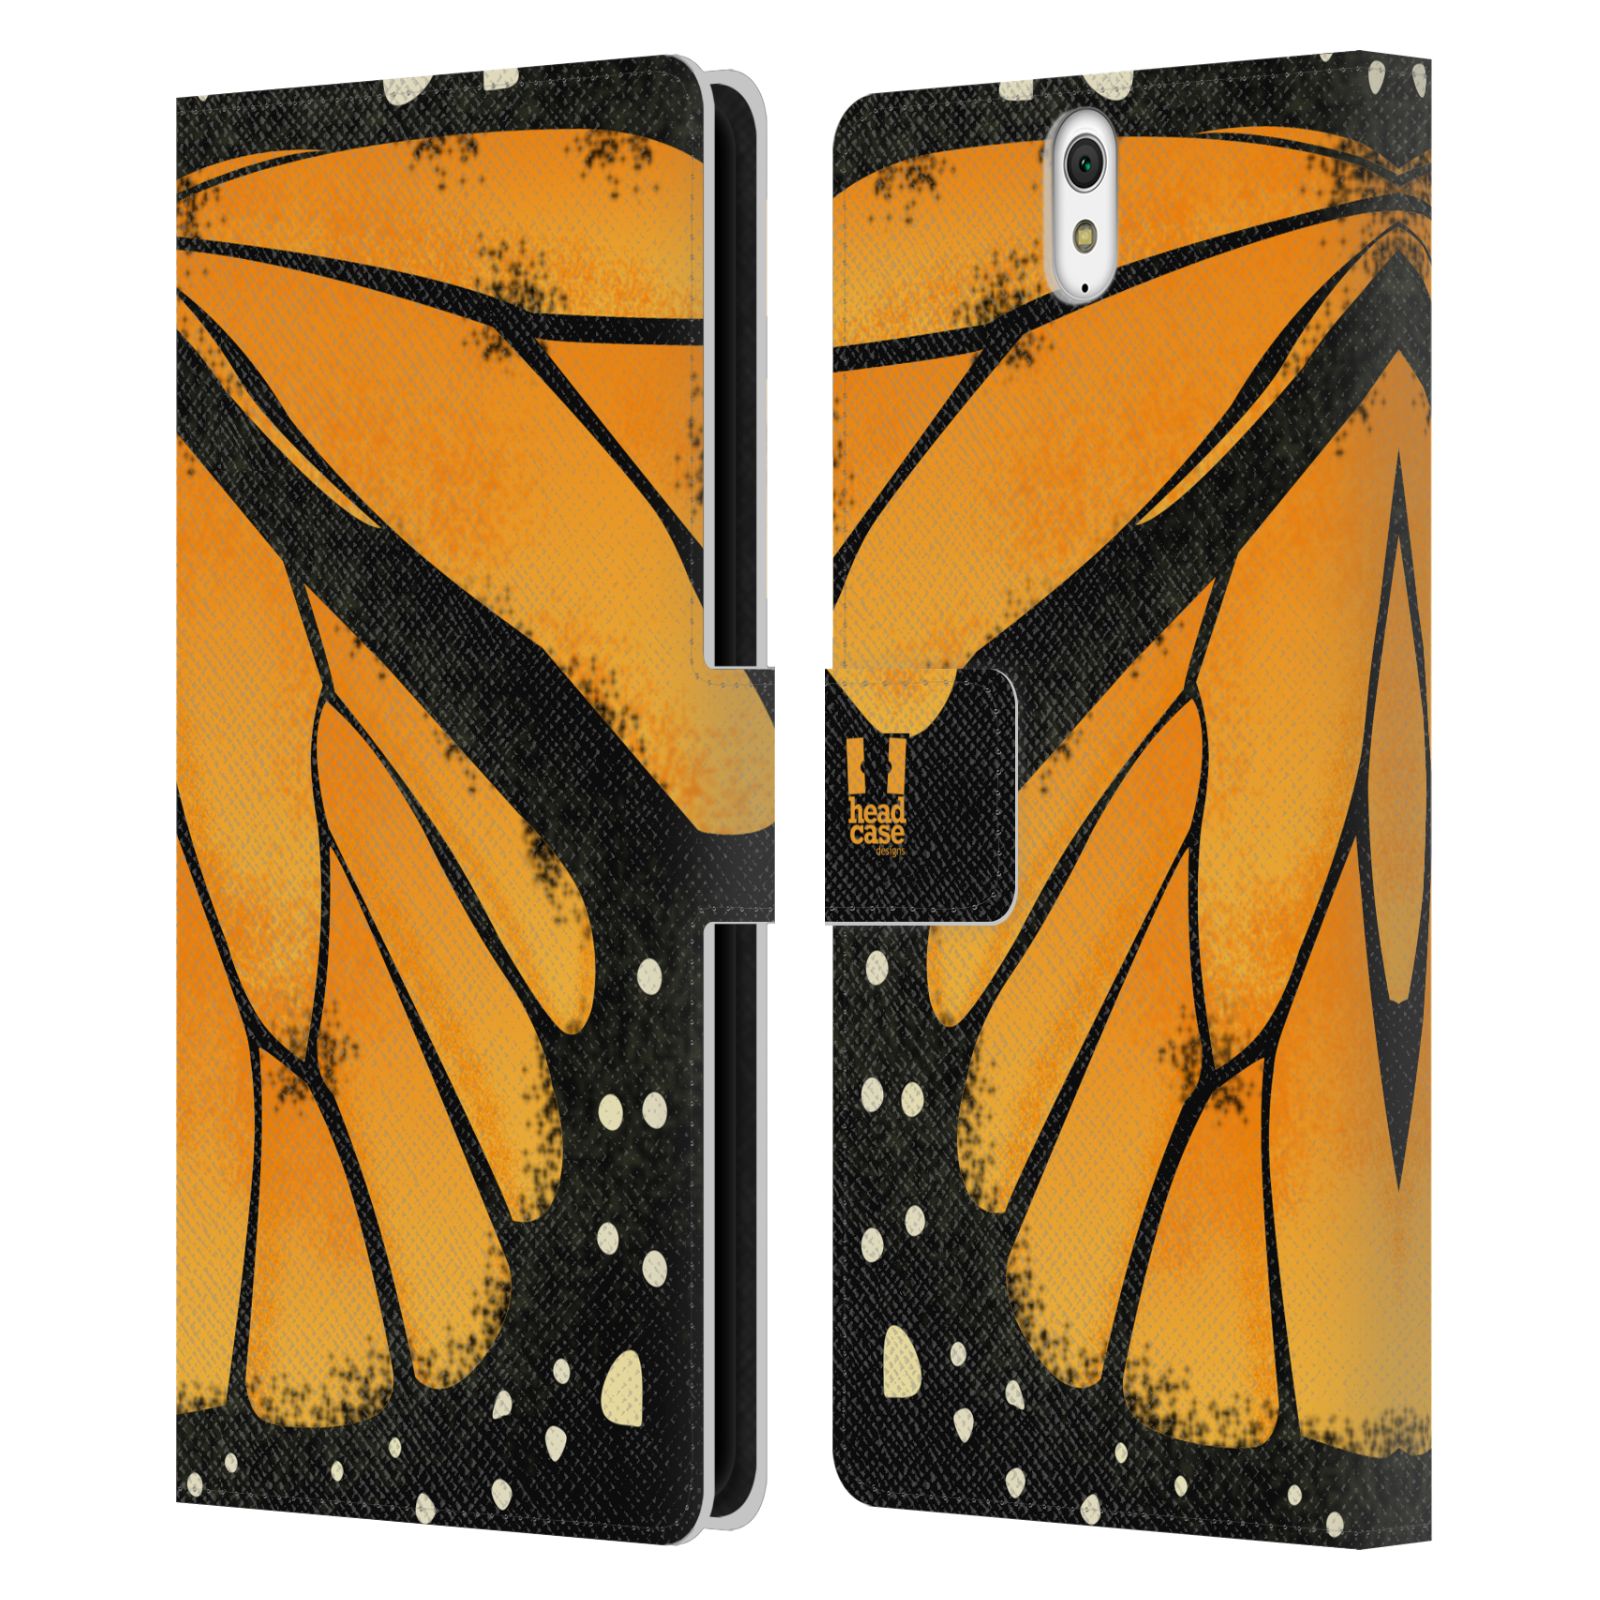 HEAD CASE Flipové pouzdro pro mobil SONY XPERIA C5 Ultra motýl a křídla kreslený vzor MONARCHA žlutá